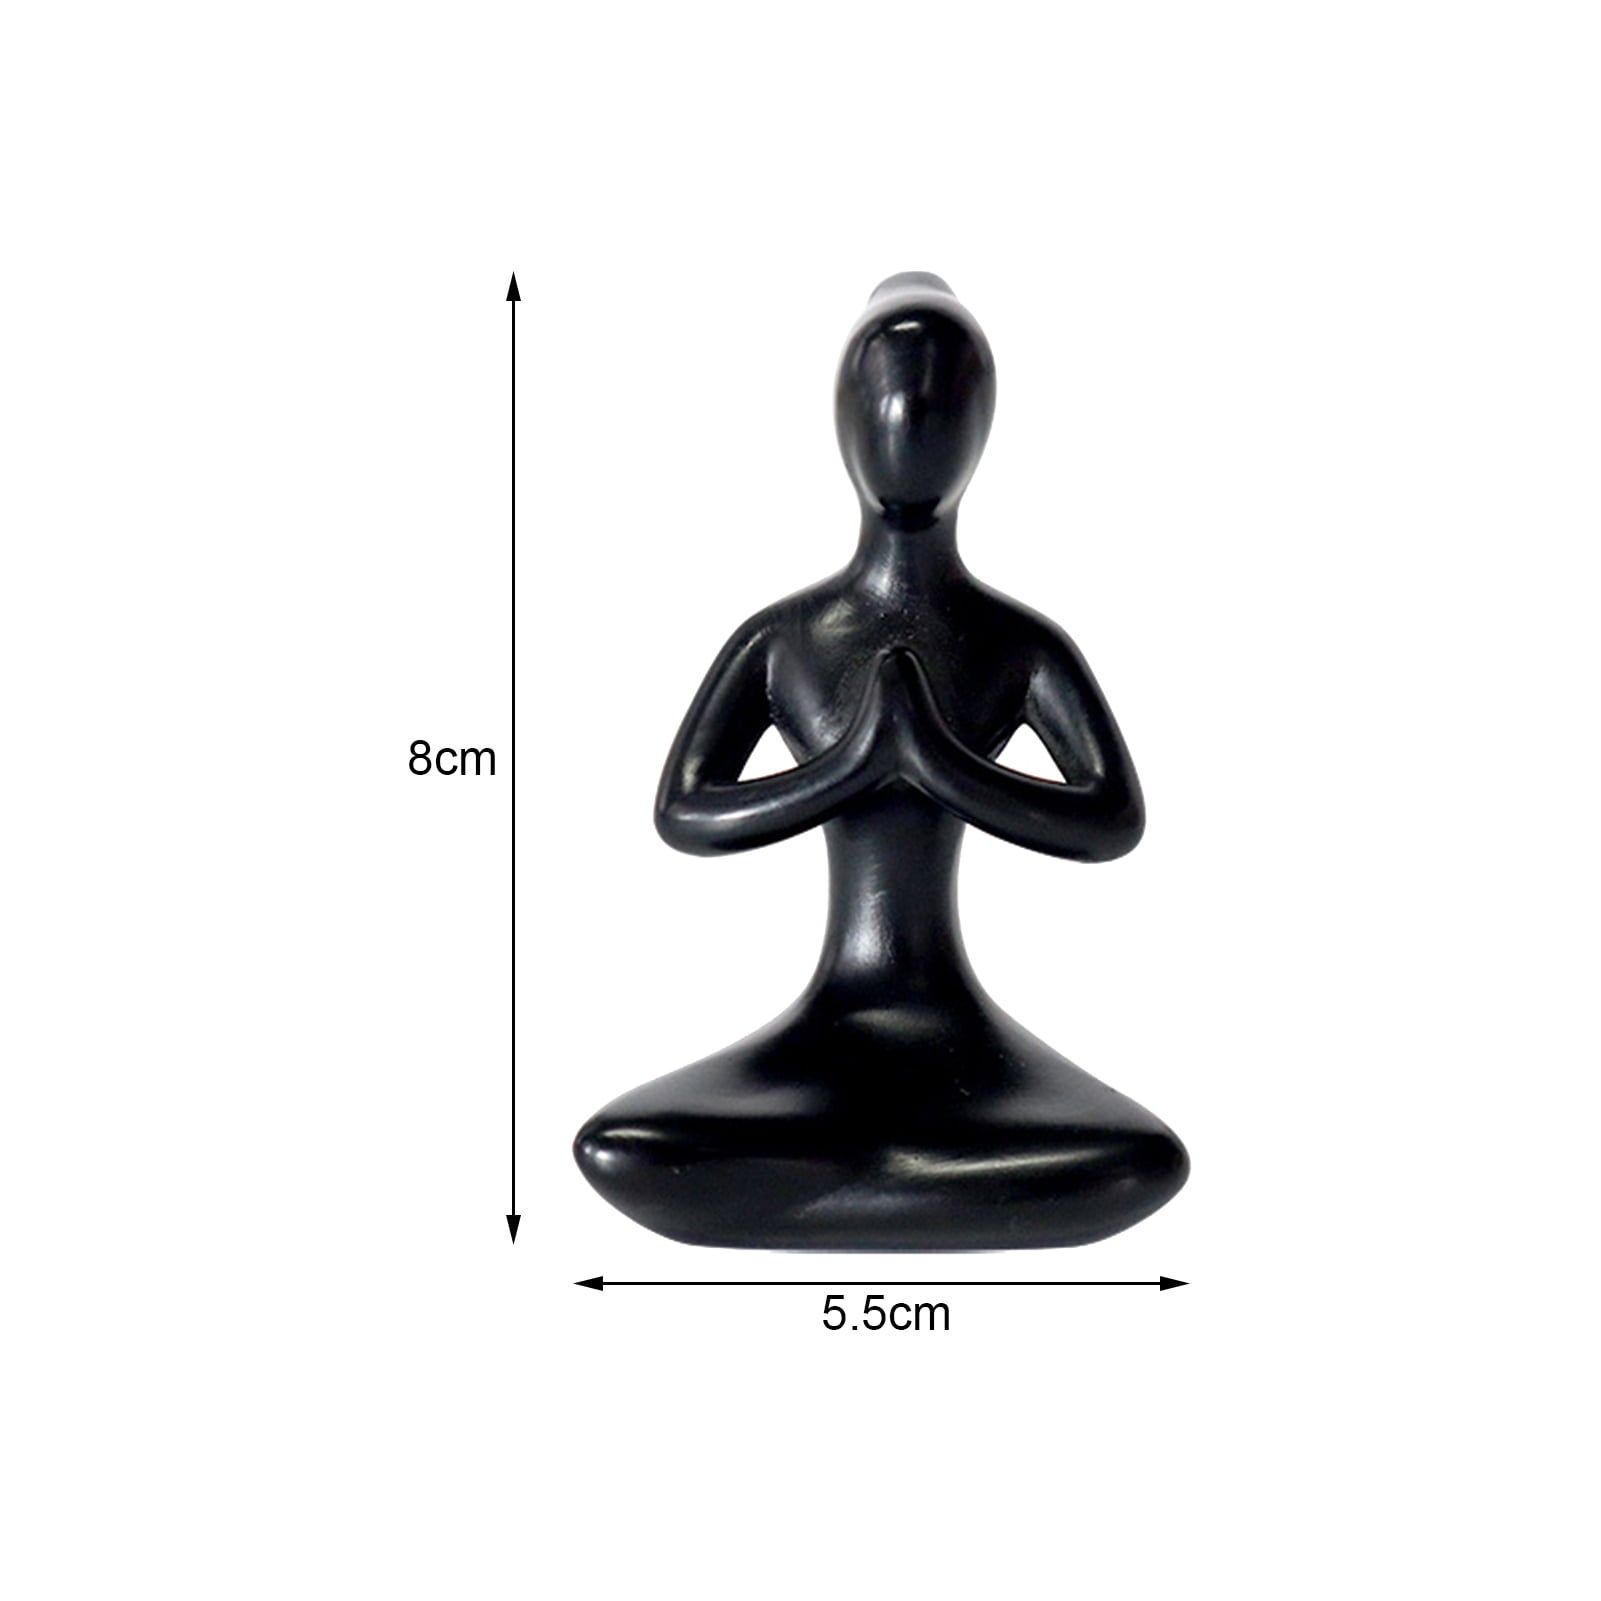 Travelwant Yoga Statue Meditation Zen Decor - Yoga Statues for